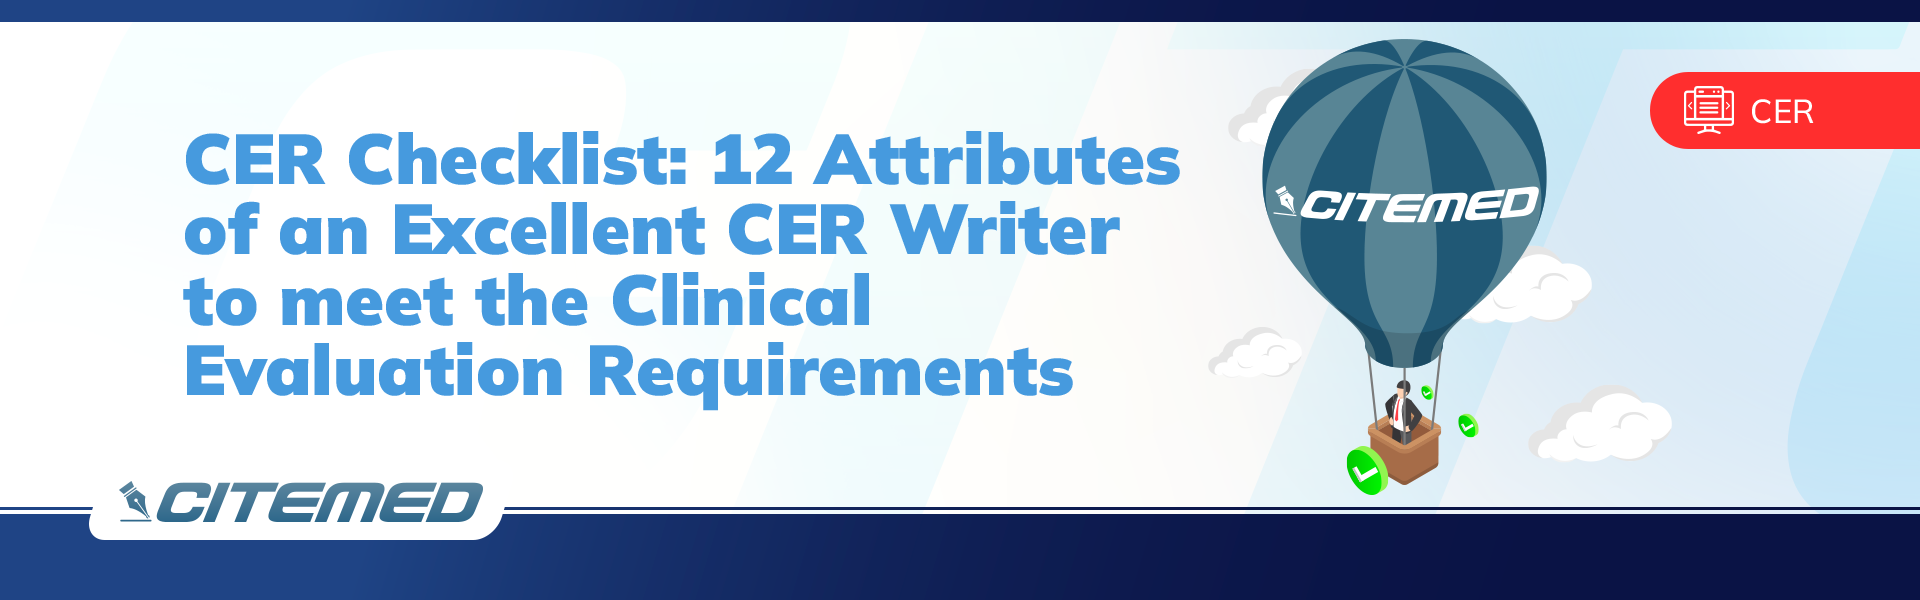 CER Checklist